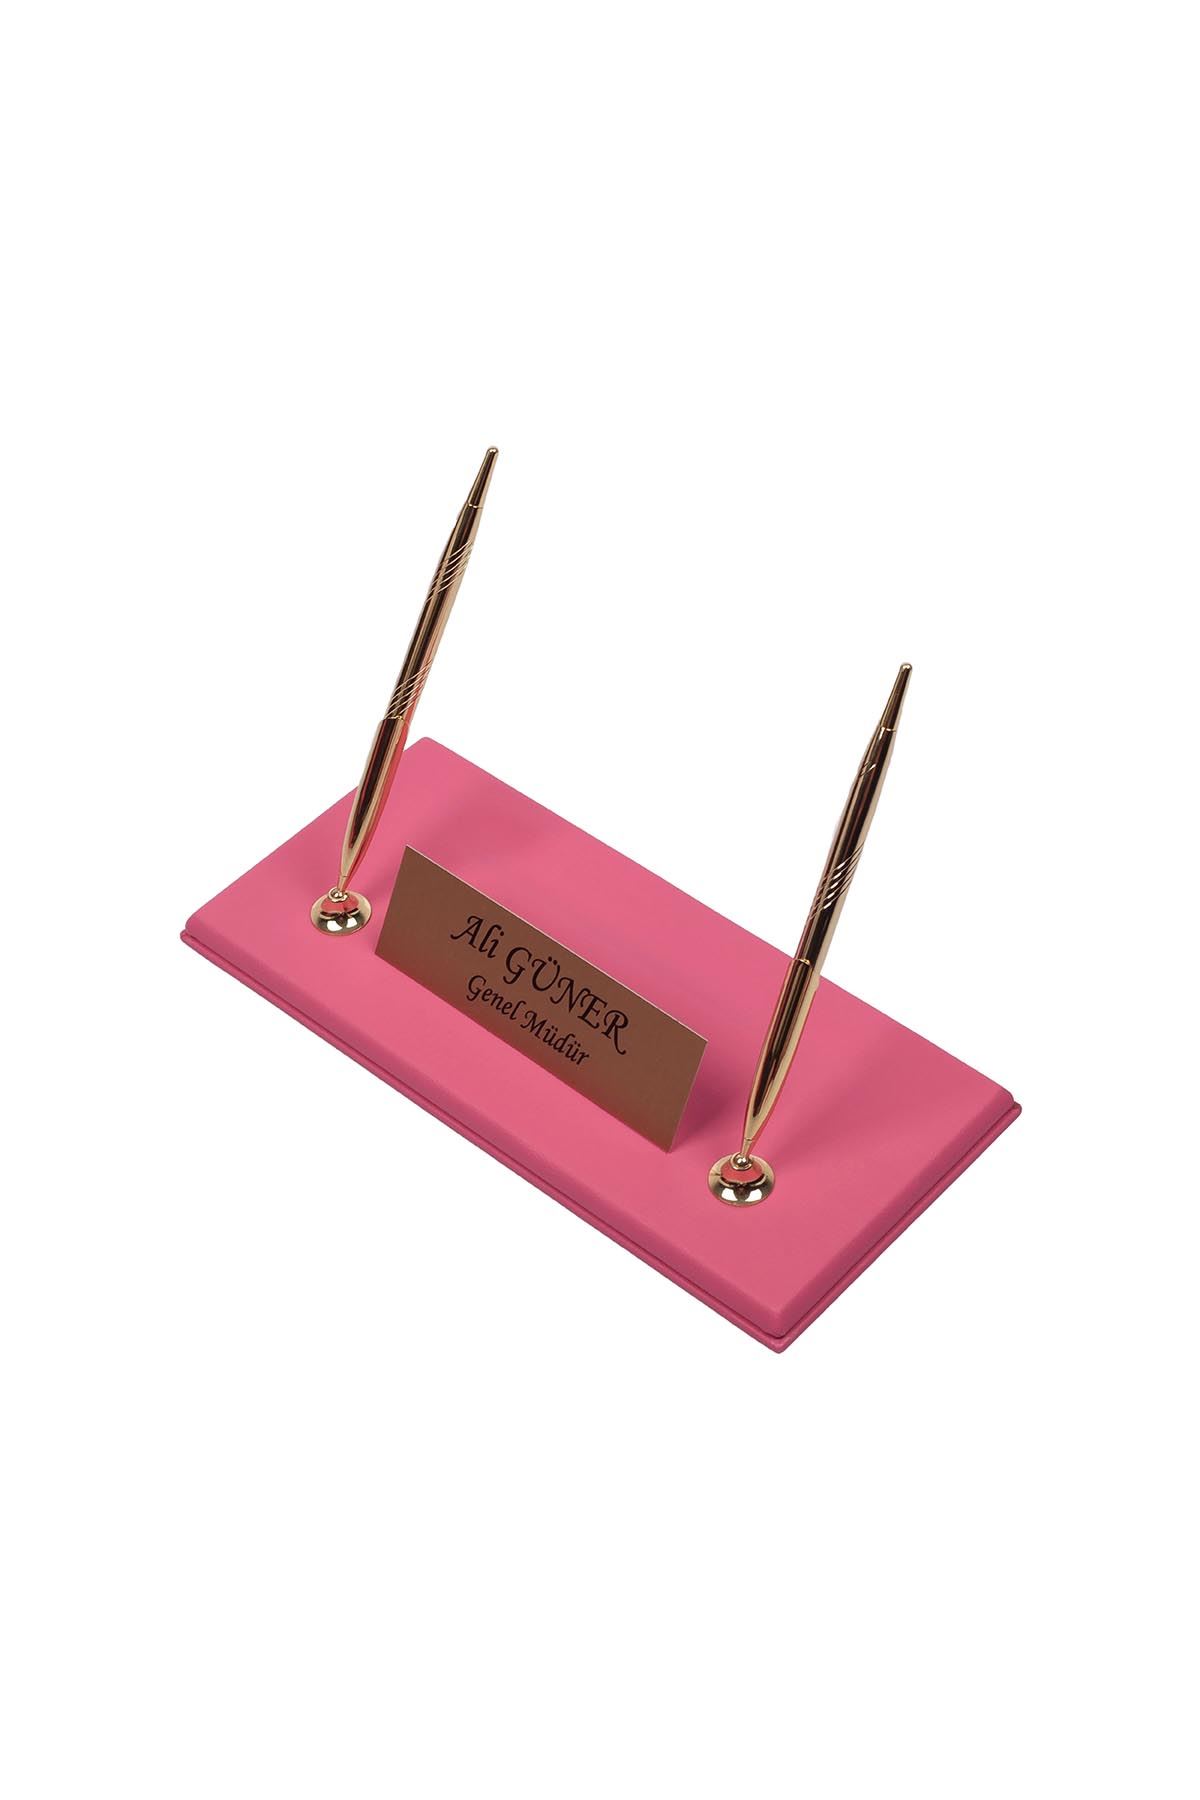 Leather Manager Pen Base Pink| Name Plate | Golden Pen Base | Desk Accessories